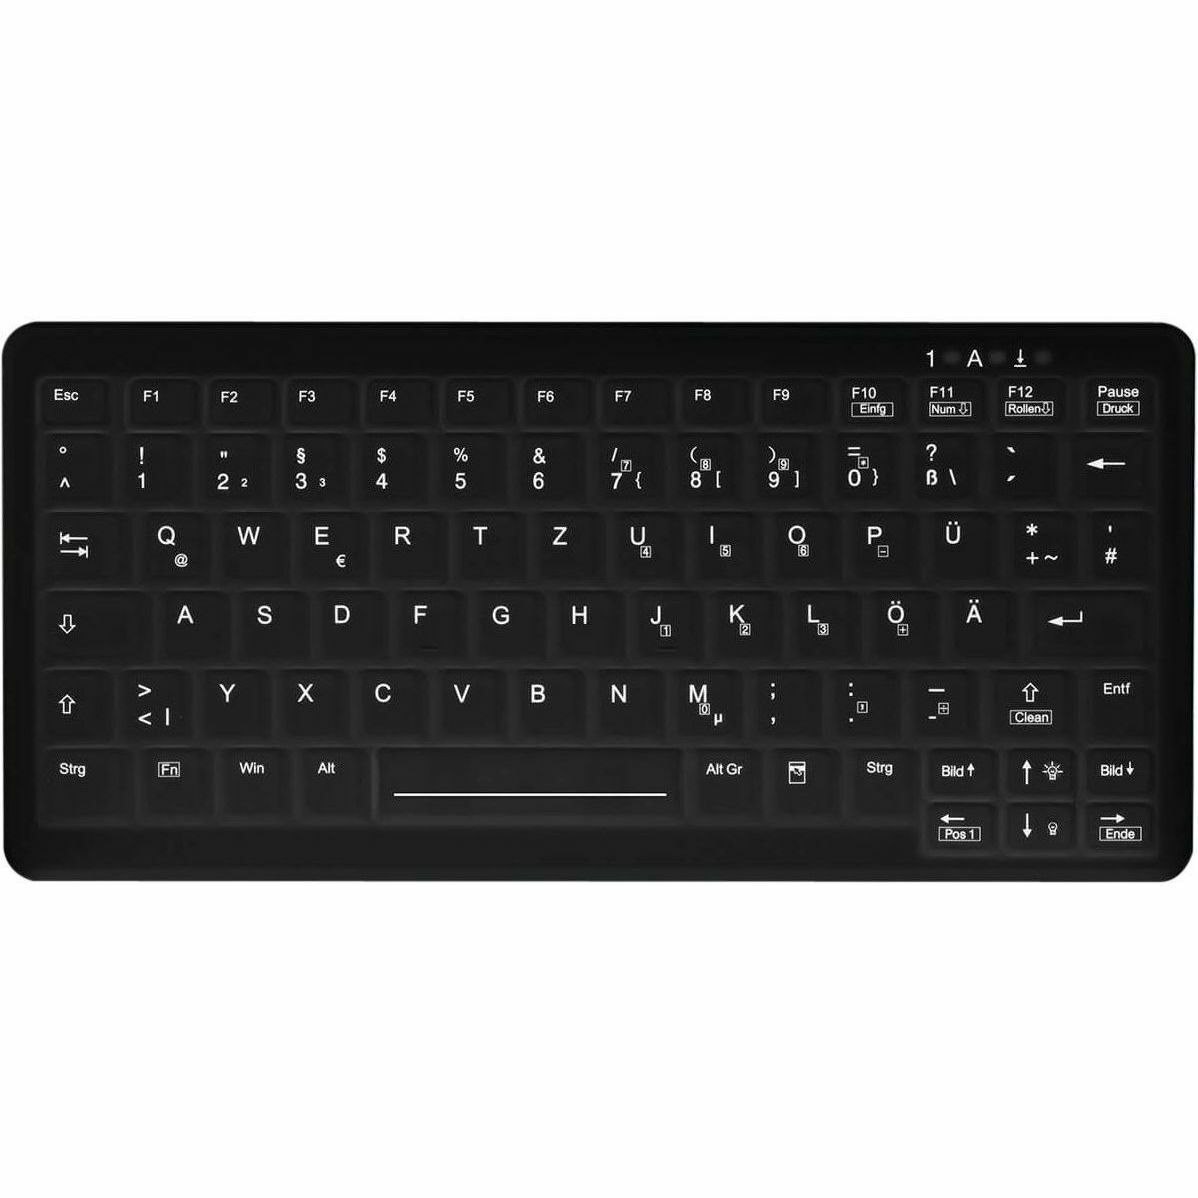 Active Key Keyboard - Cable Connectivity - USB 1.1 Interface - English (UK) - Black